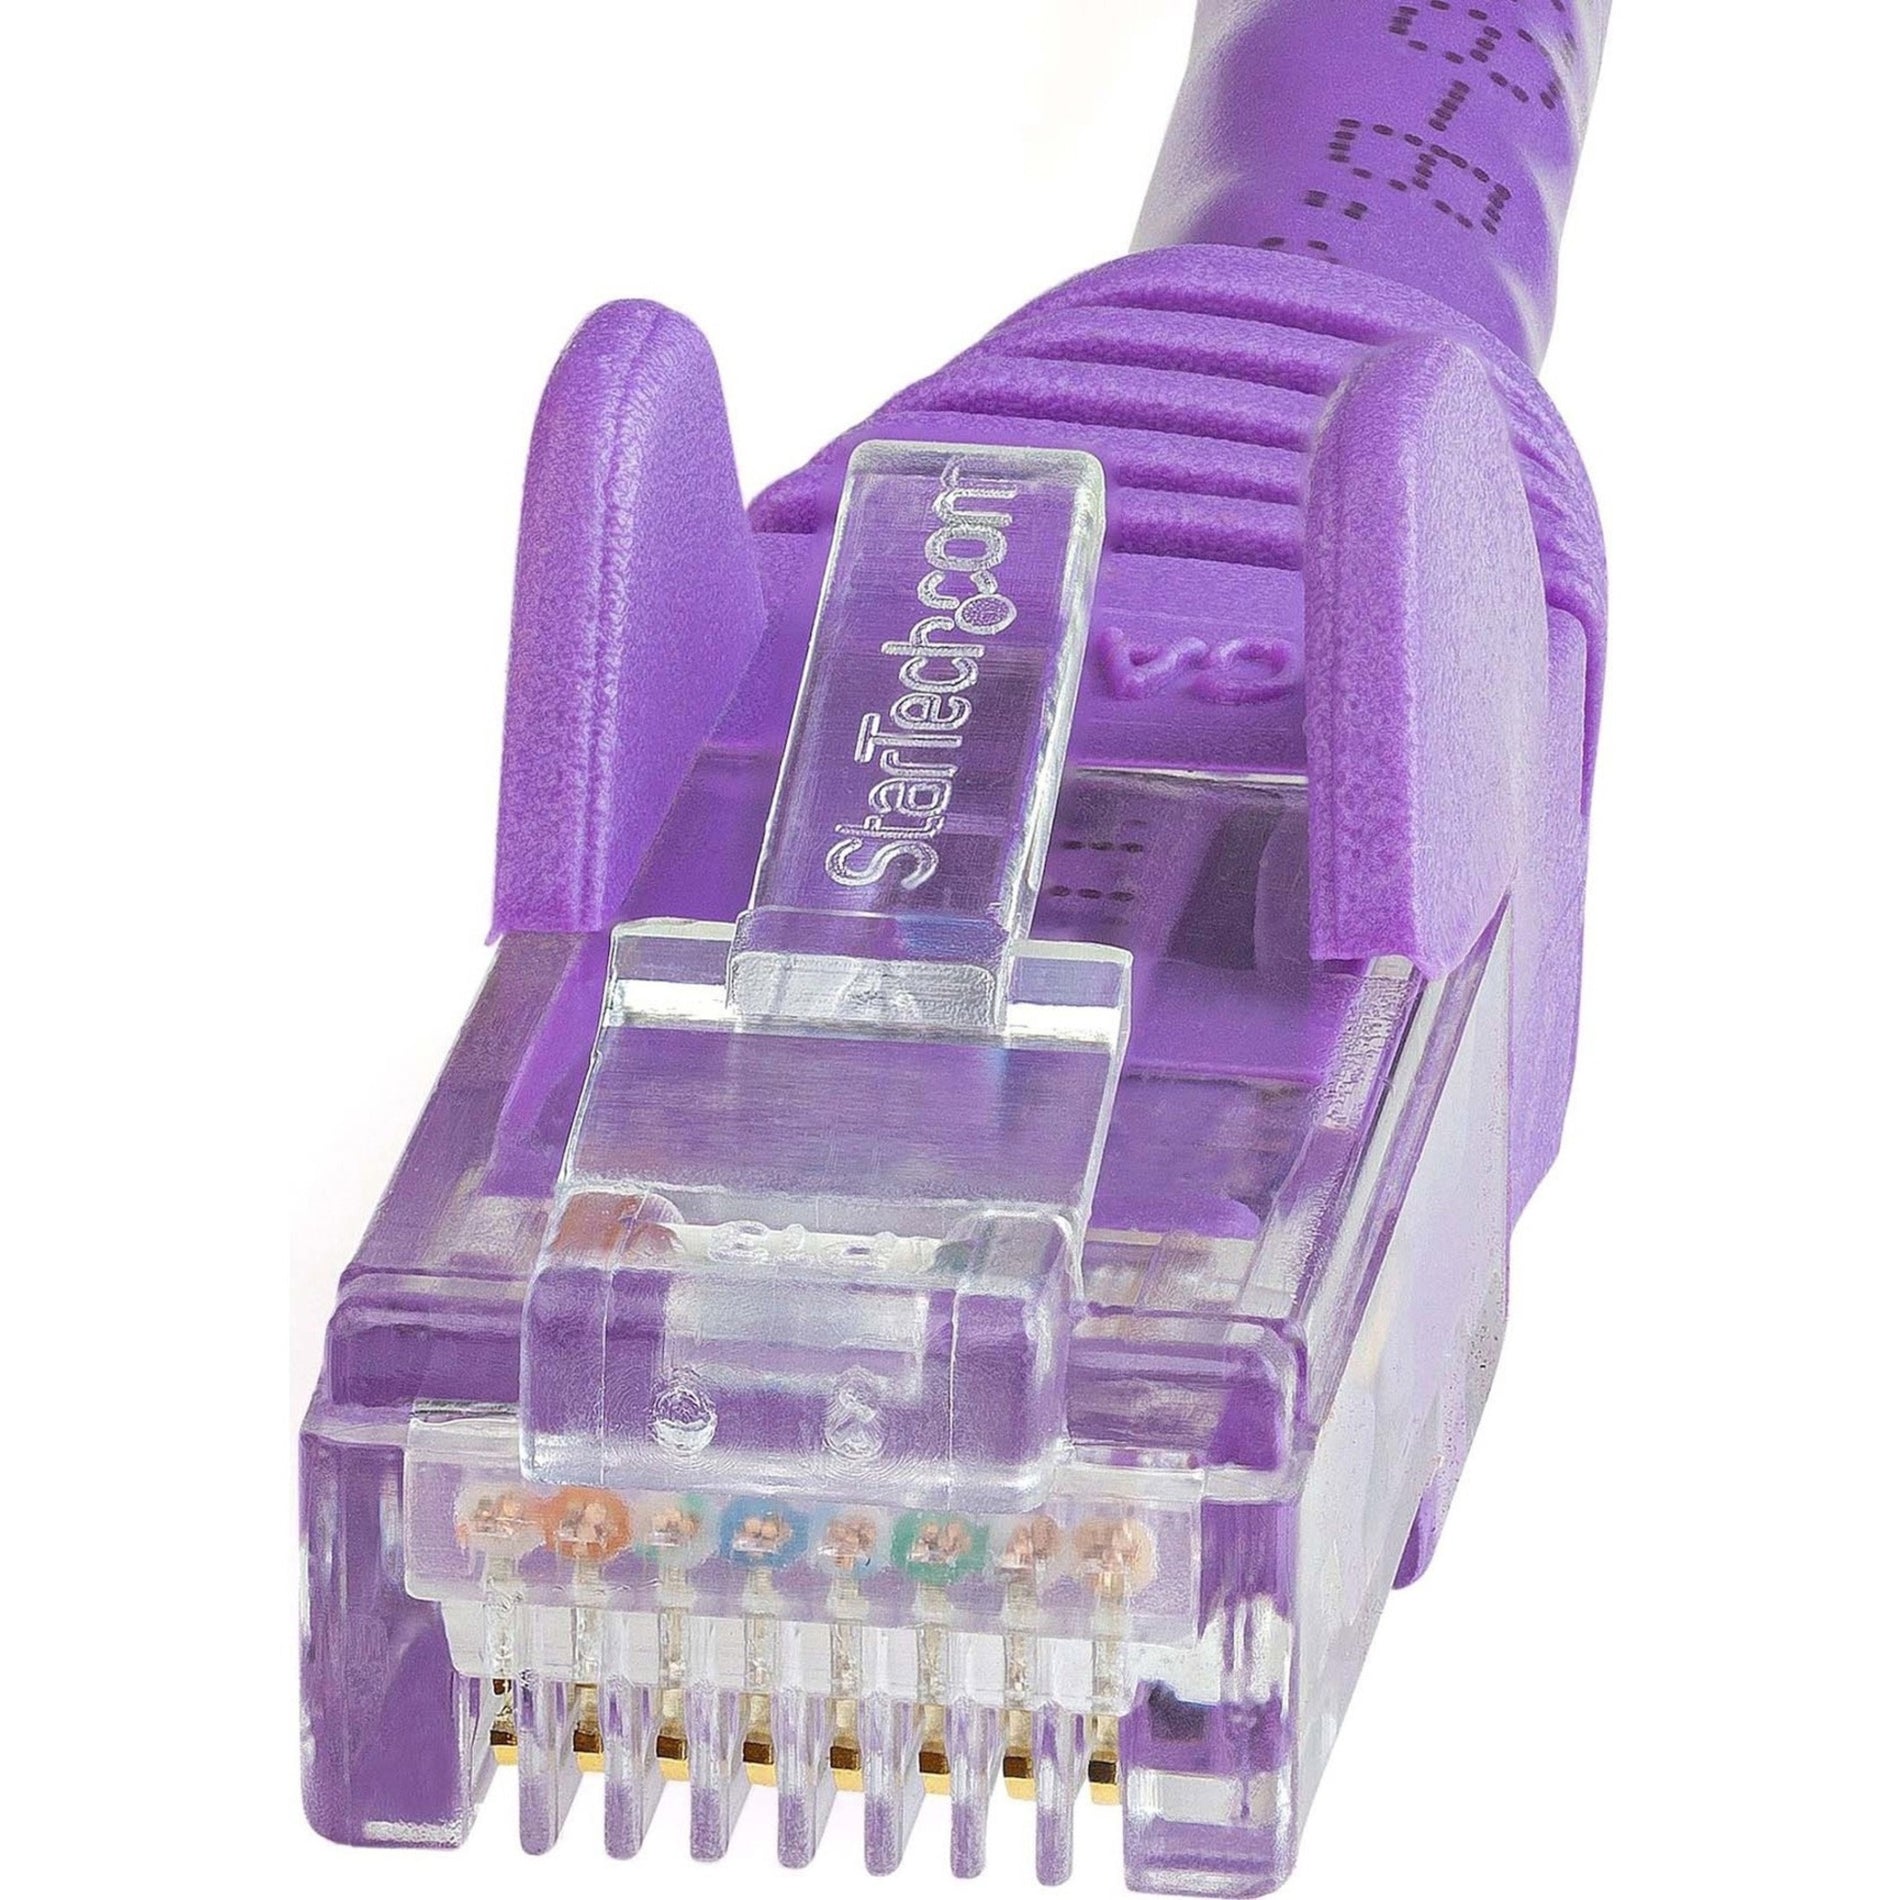 StarTech.com N6PATCH25PL 25 ft Purple Snagless Cat6 UTP Patch Cable, 10 Gbit/s Data Transfer Rate, Lifetime Warranty